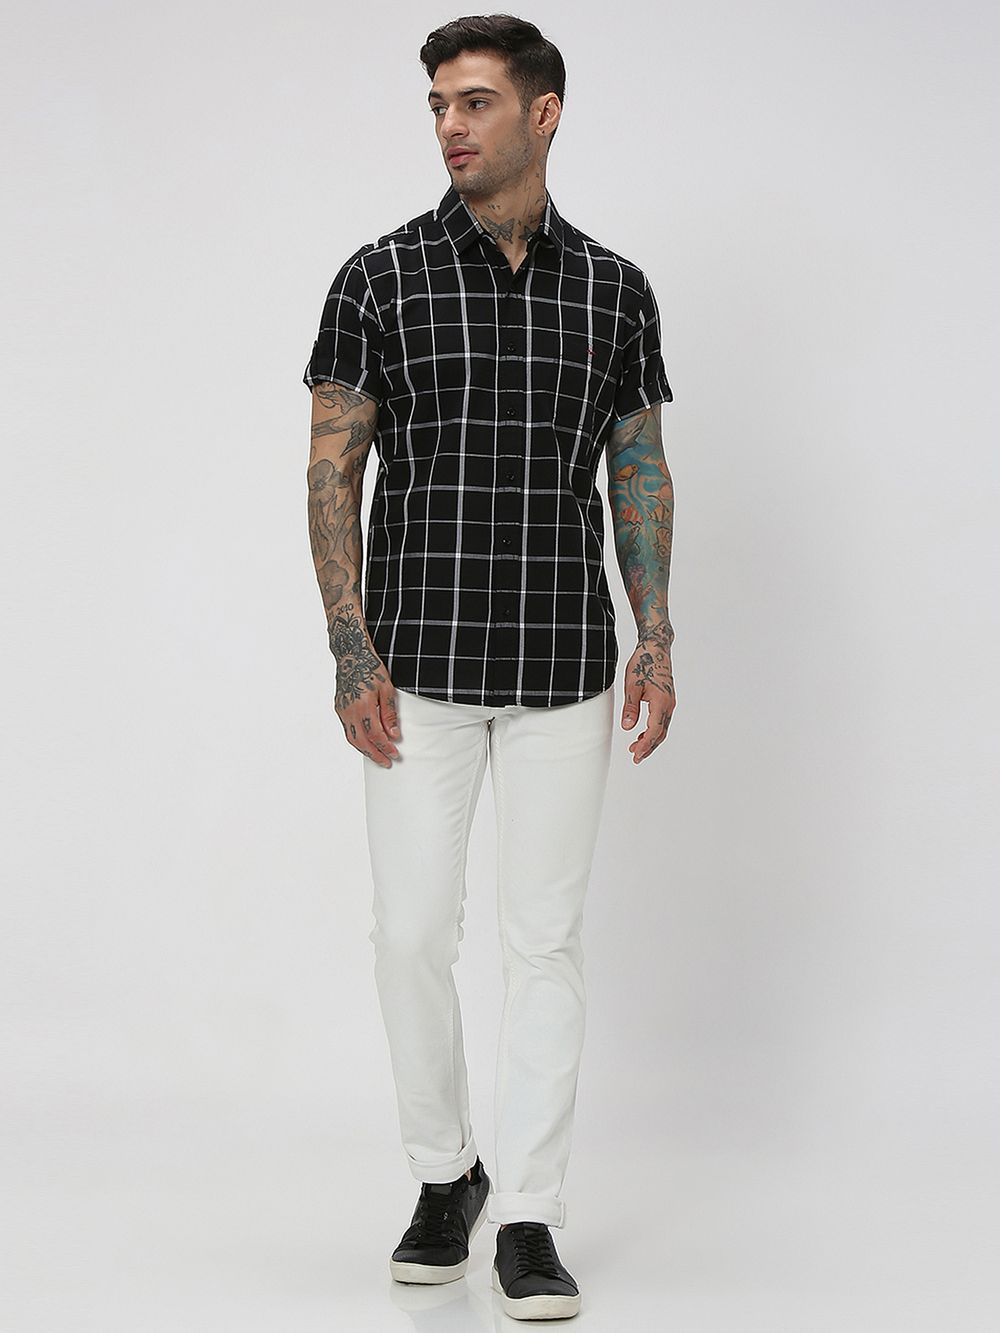 Black & White Windowpane Check Slim Fit Casual Shirt